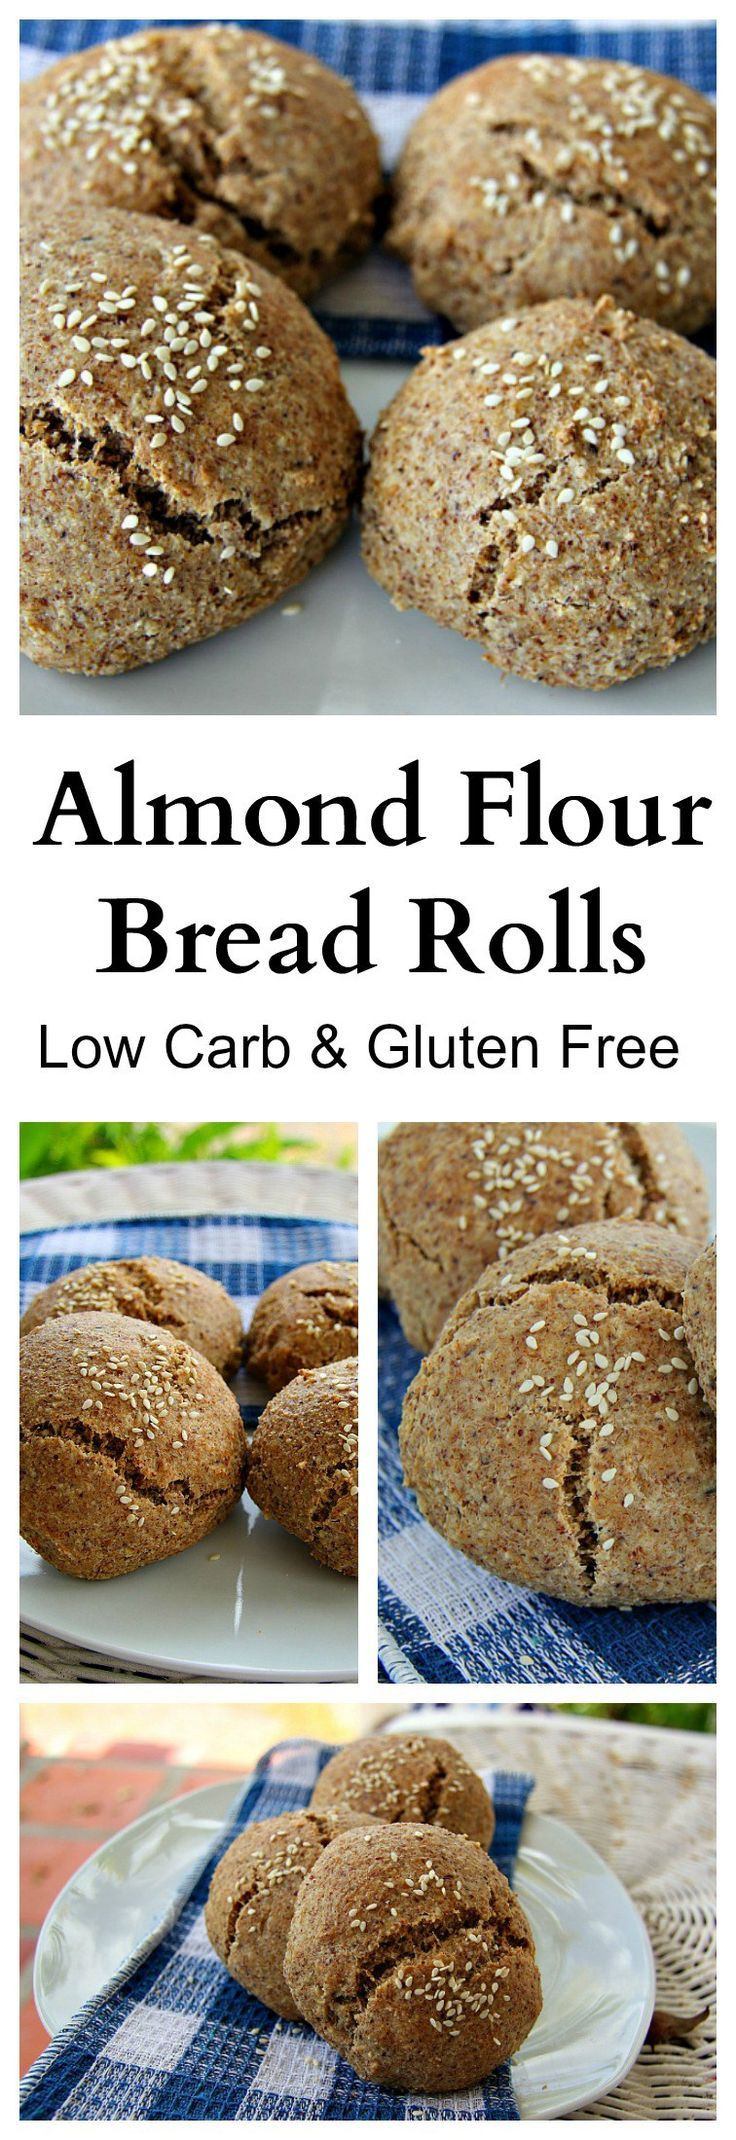 Almond Flour Recipes Low Carb
 Best 25 Almond flour ideas on Pinterest